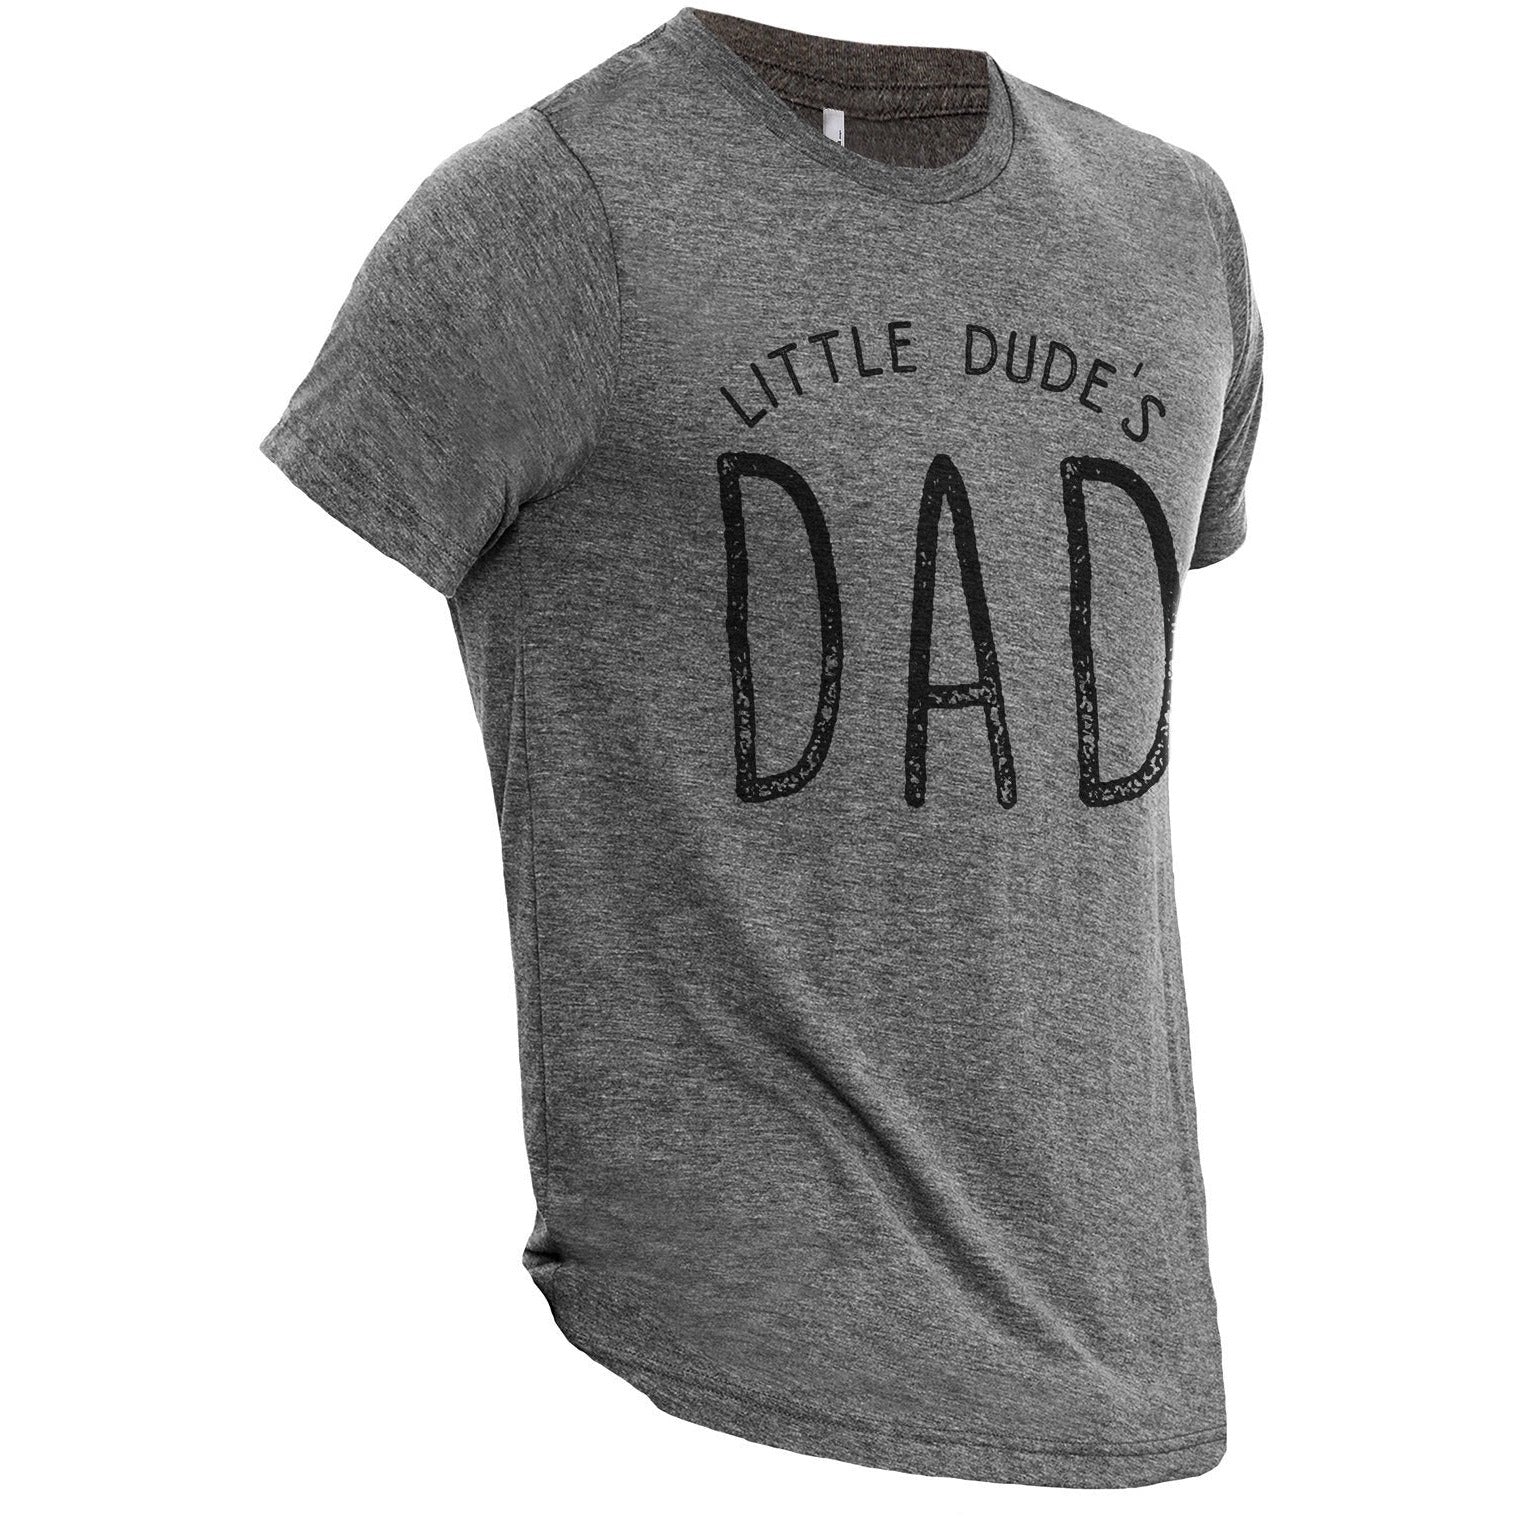 Lil Dude's Dad Heather Grey Printed Graphic Men's Crew T-Shirt Tee